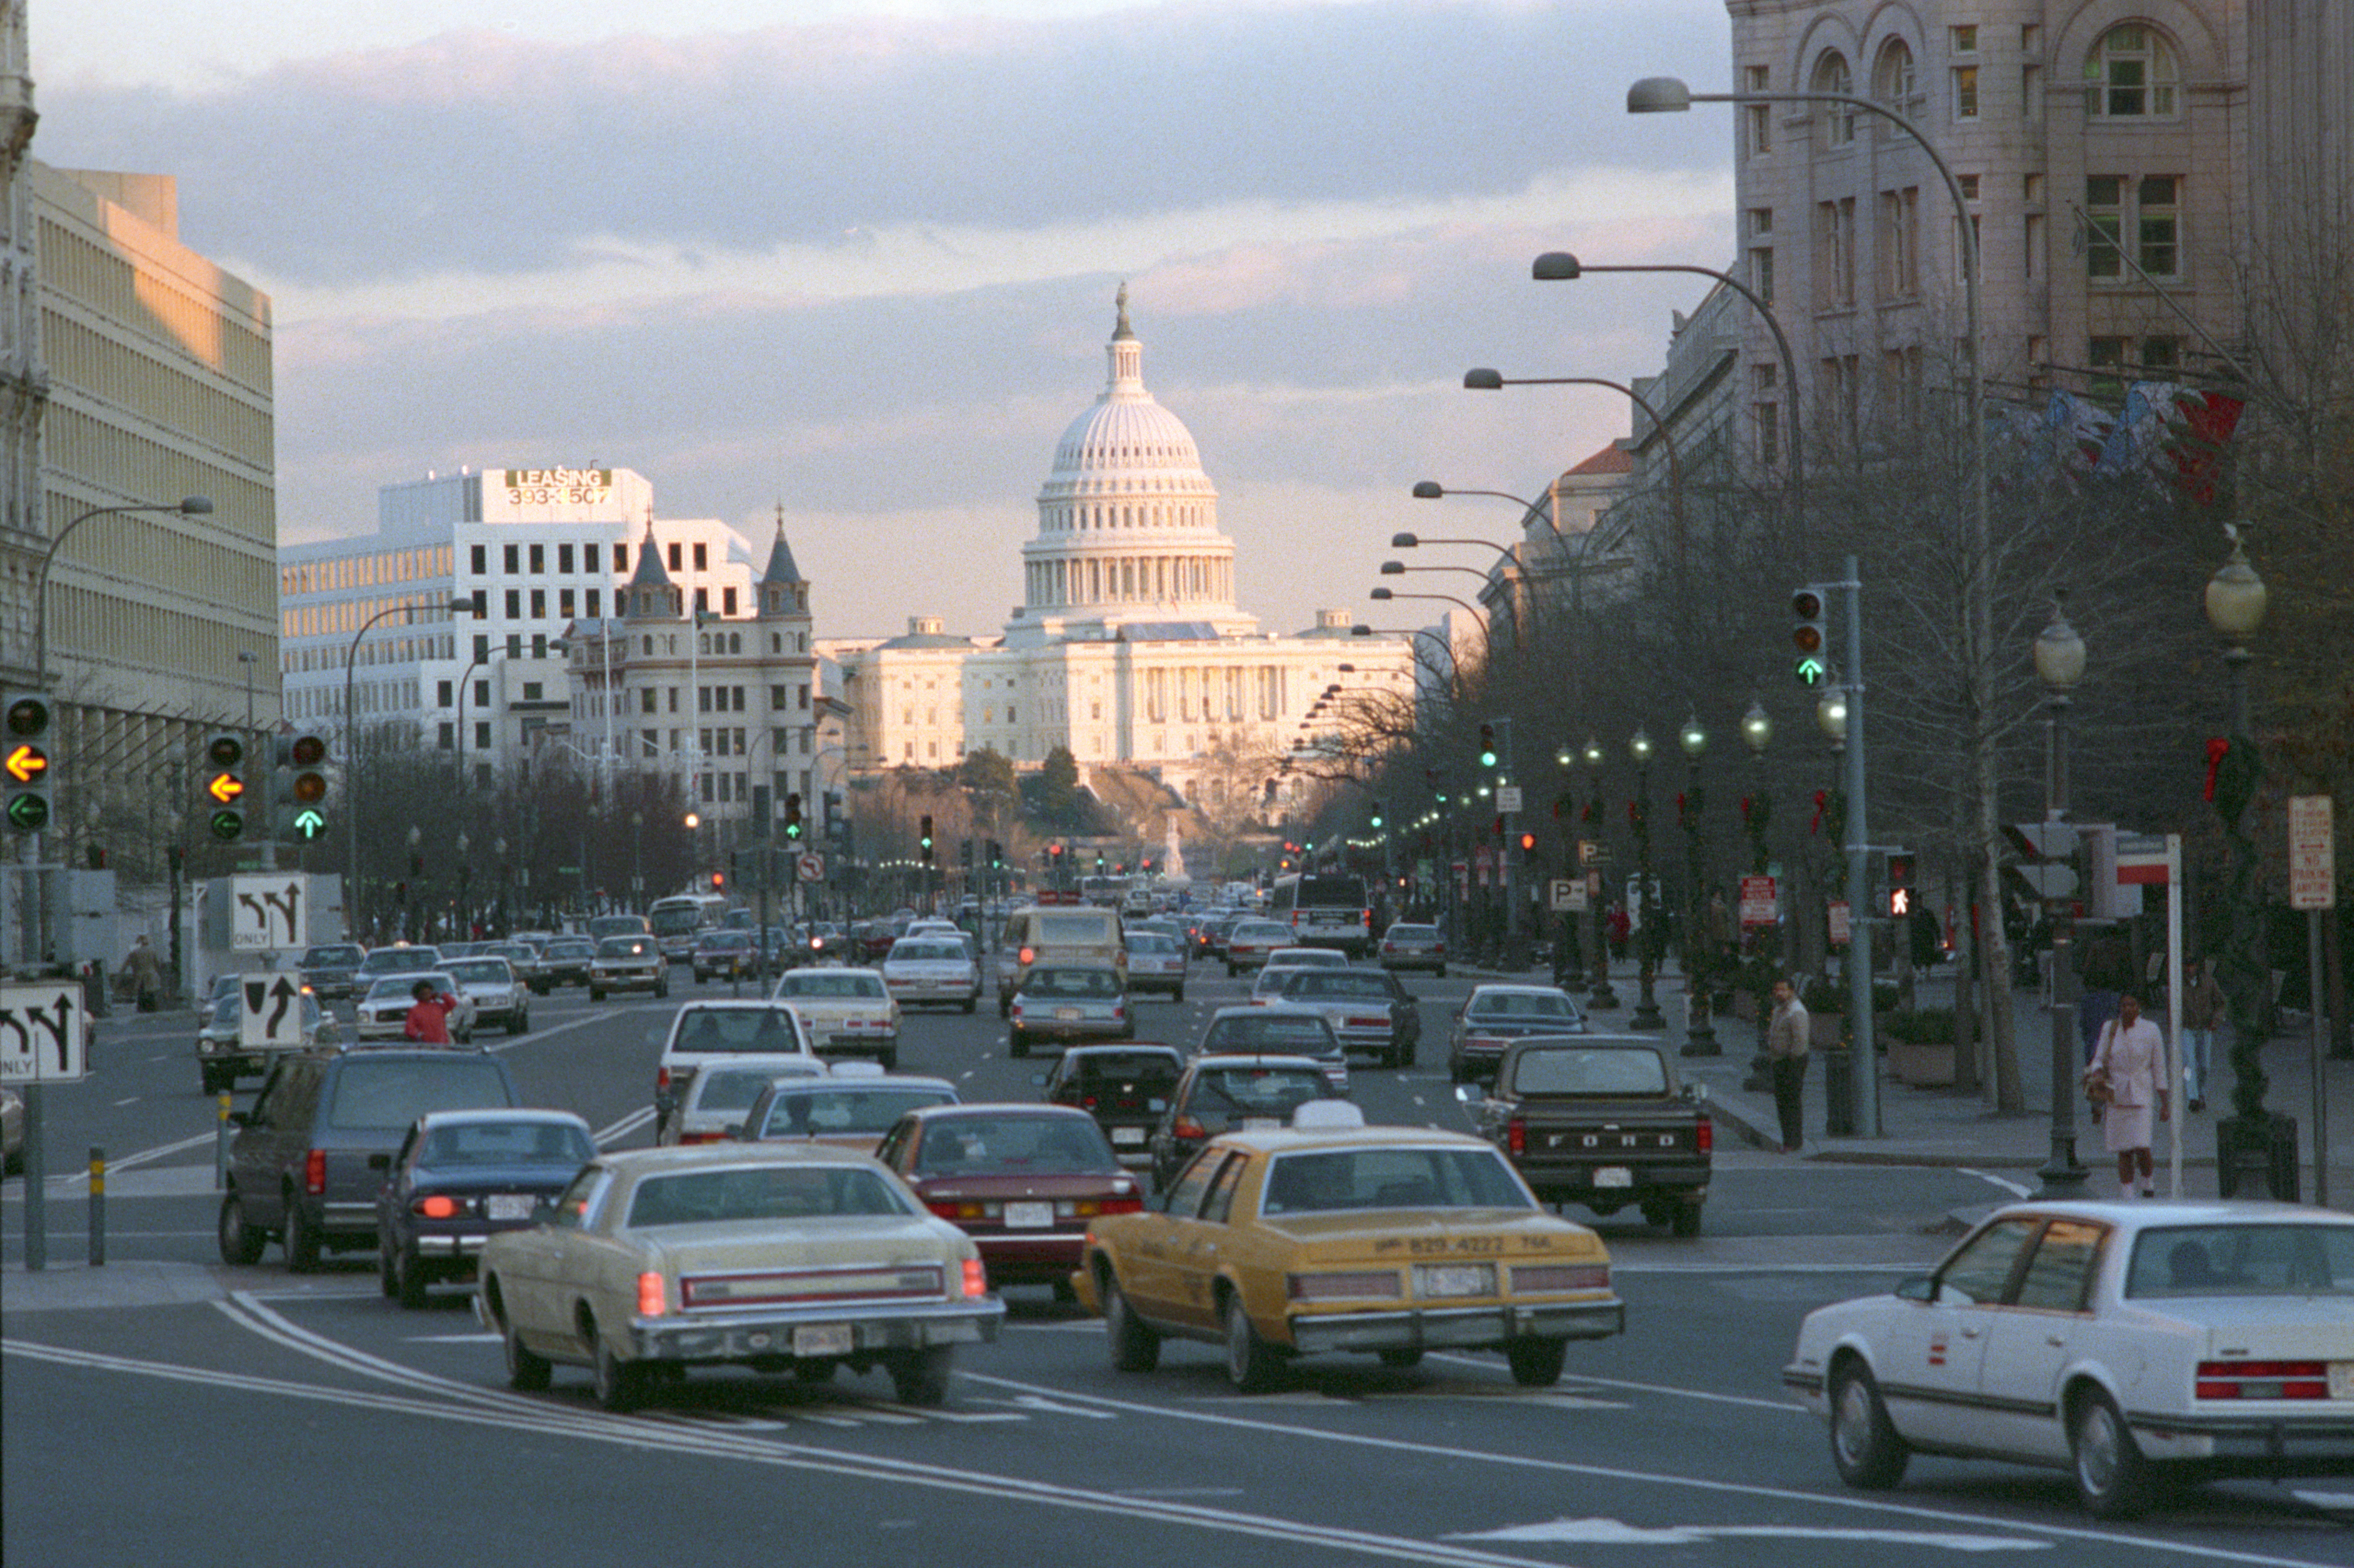 Вид на Капитолий со стороны Индепенденс-авеню.&nbsp;
&nbsp;Фото: &copy; РИА Новости/&nbsp;Юрий Абрамочкин&nbsp;